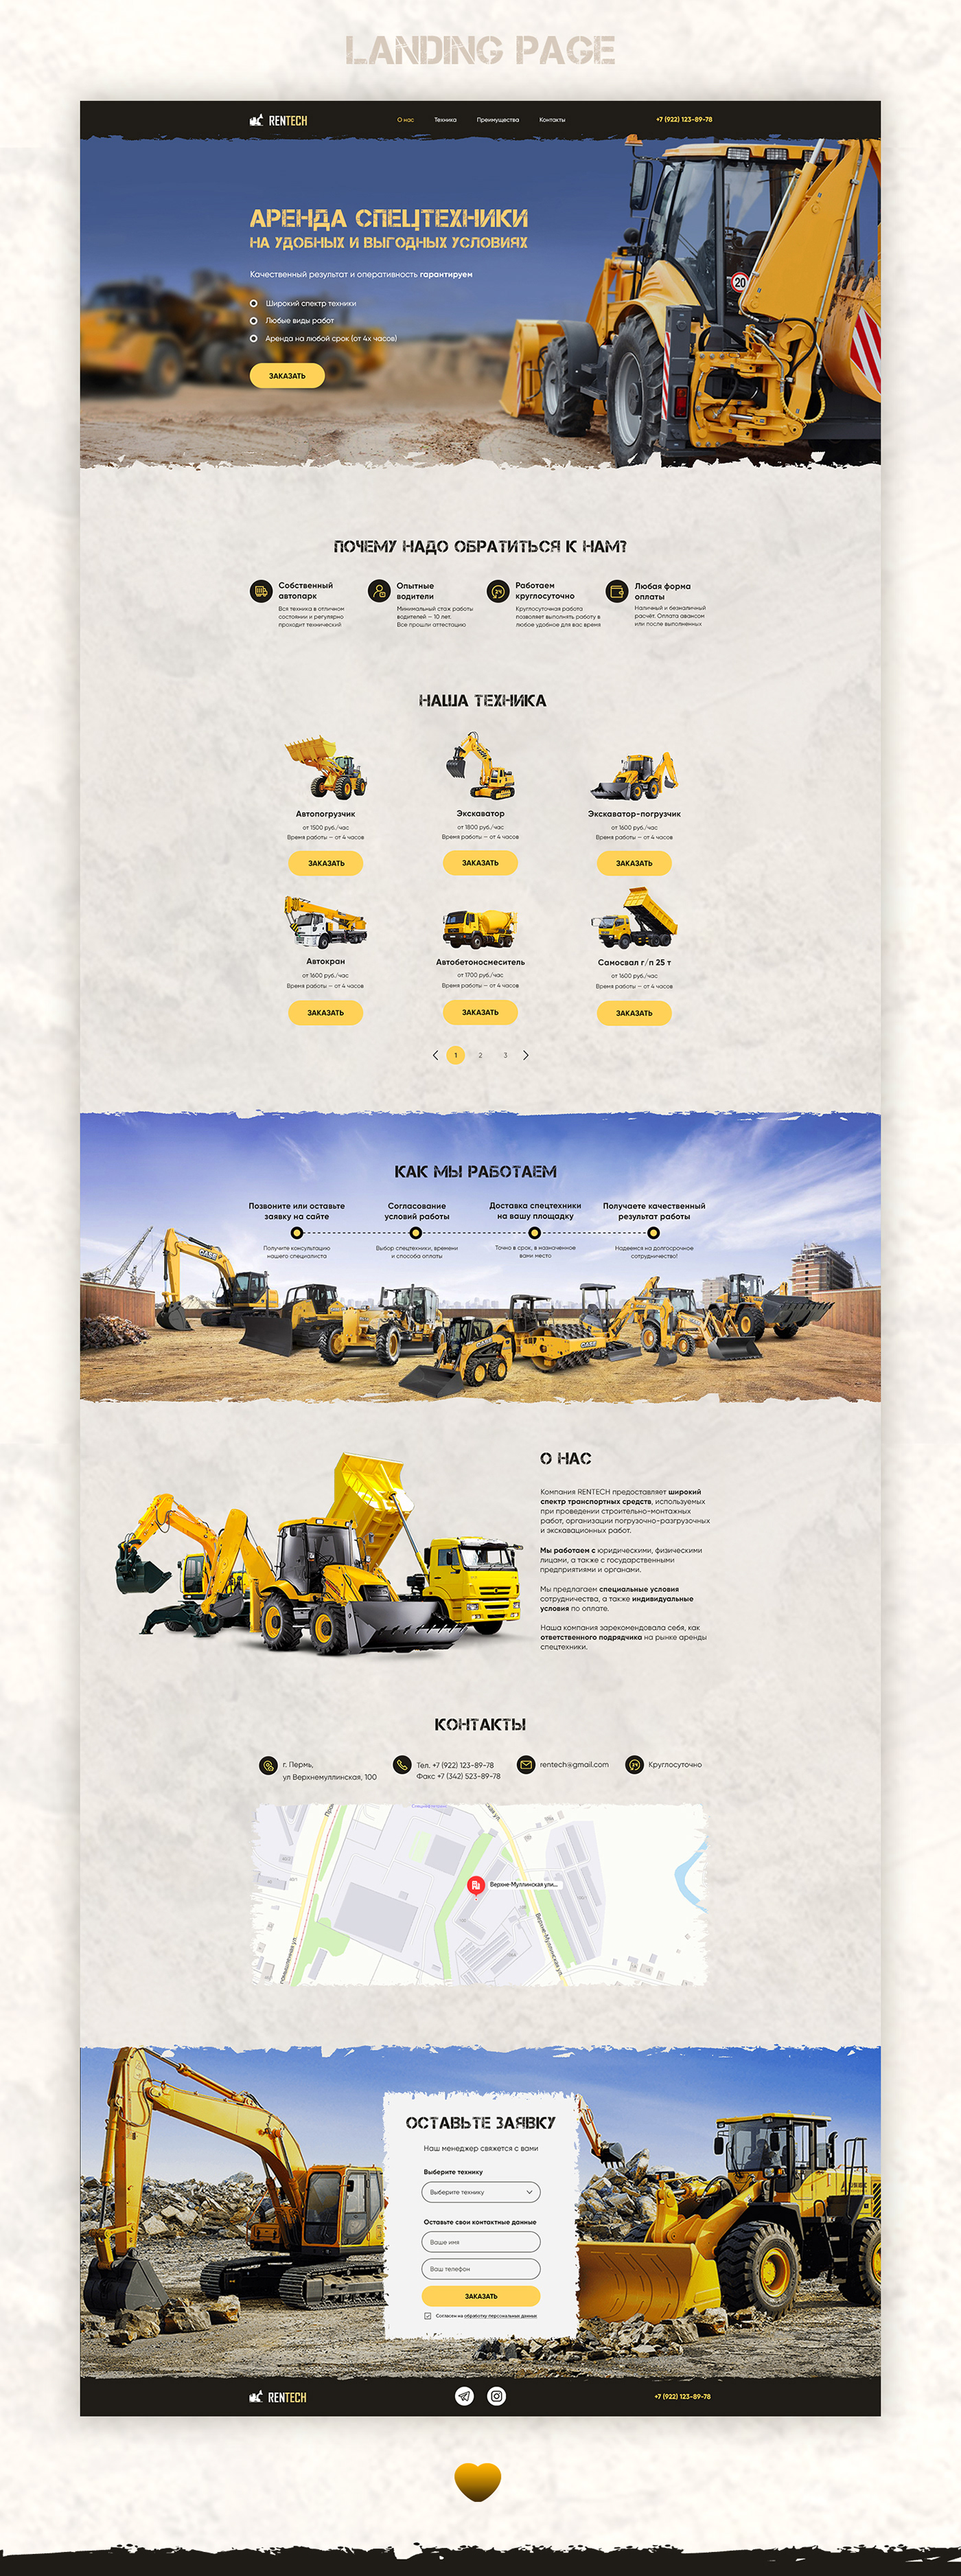 Excavator landing page machinery Special equipment Tractor Web Design  веб-дизайн дизайн сайта лендинг спецтехника